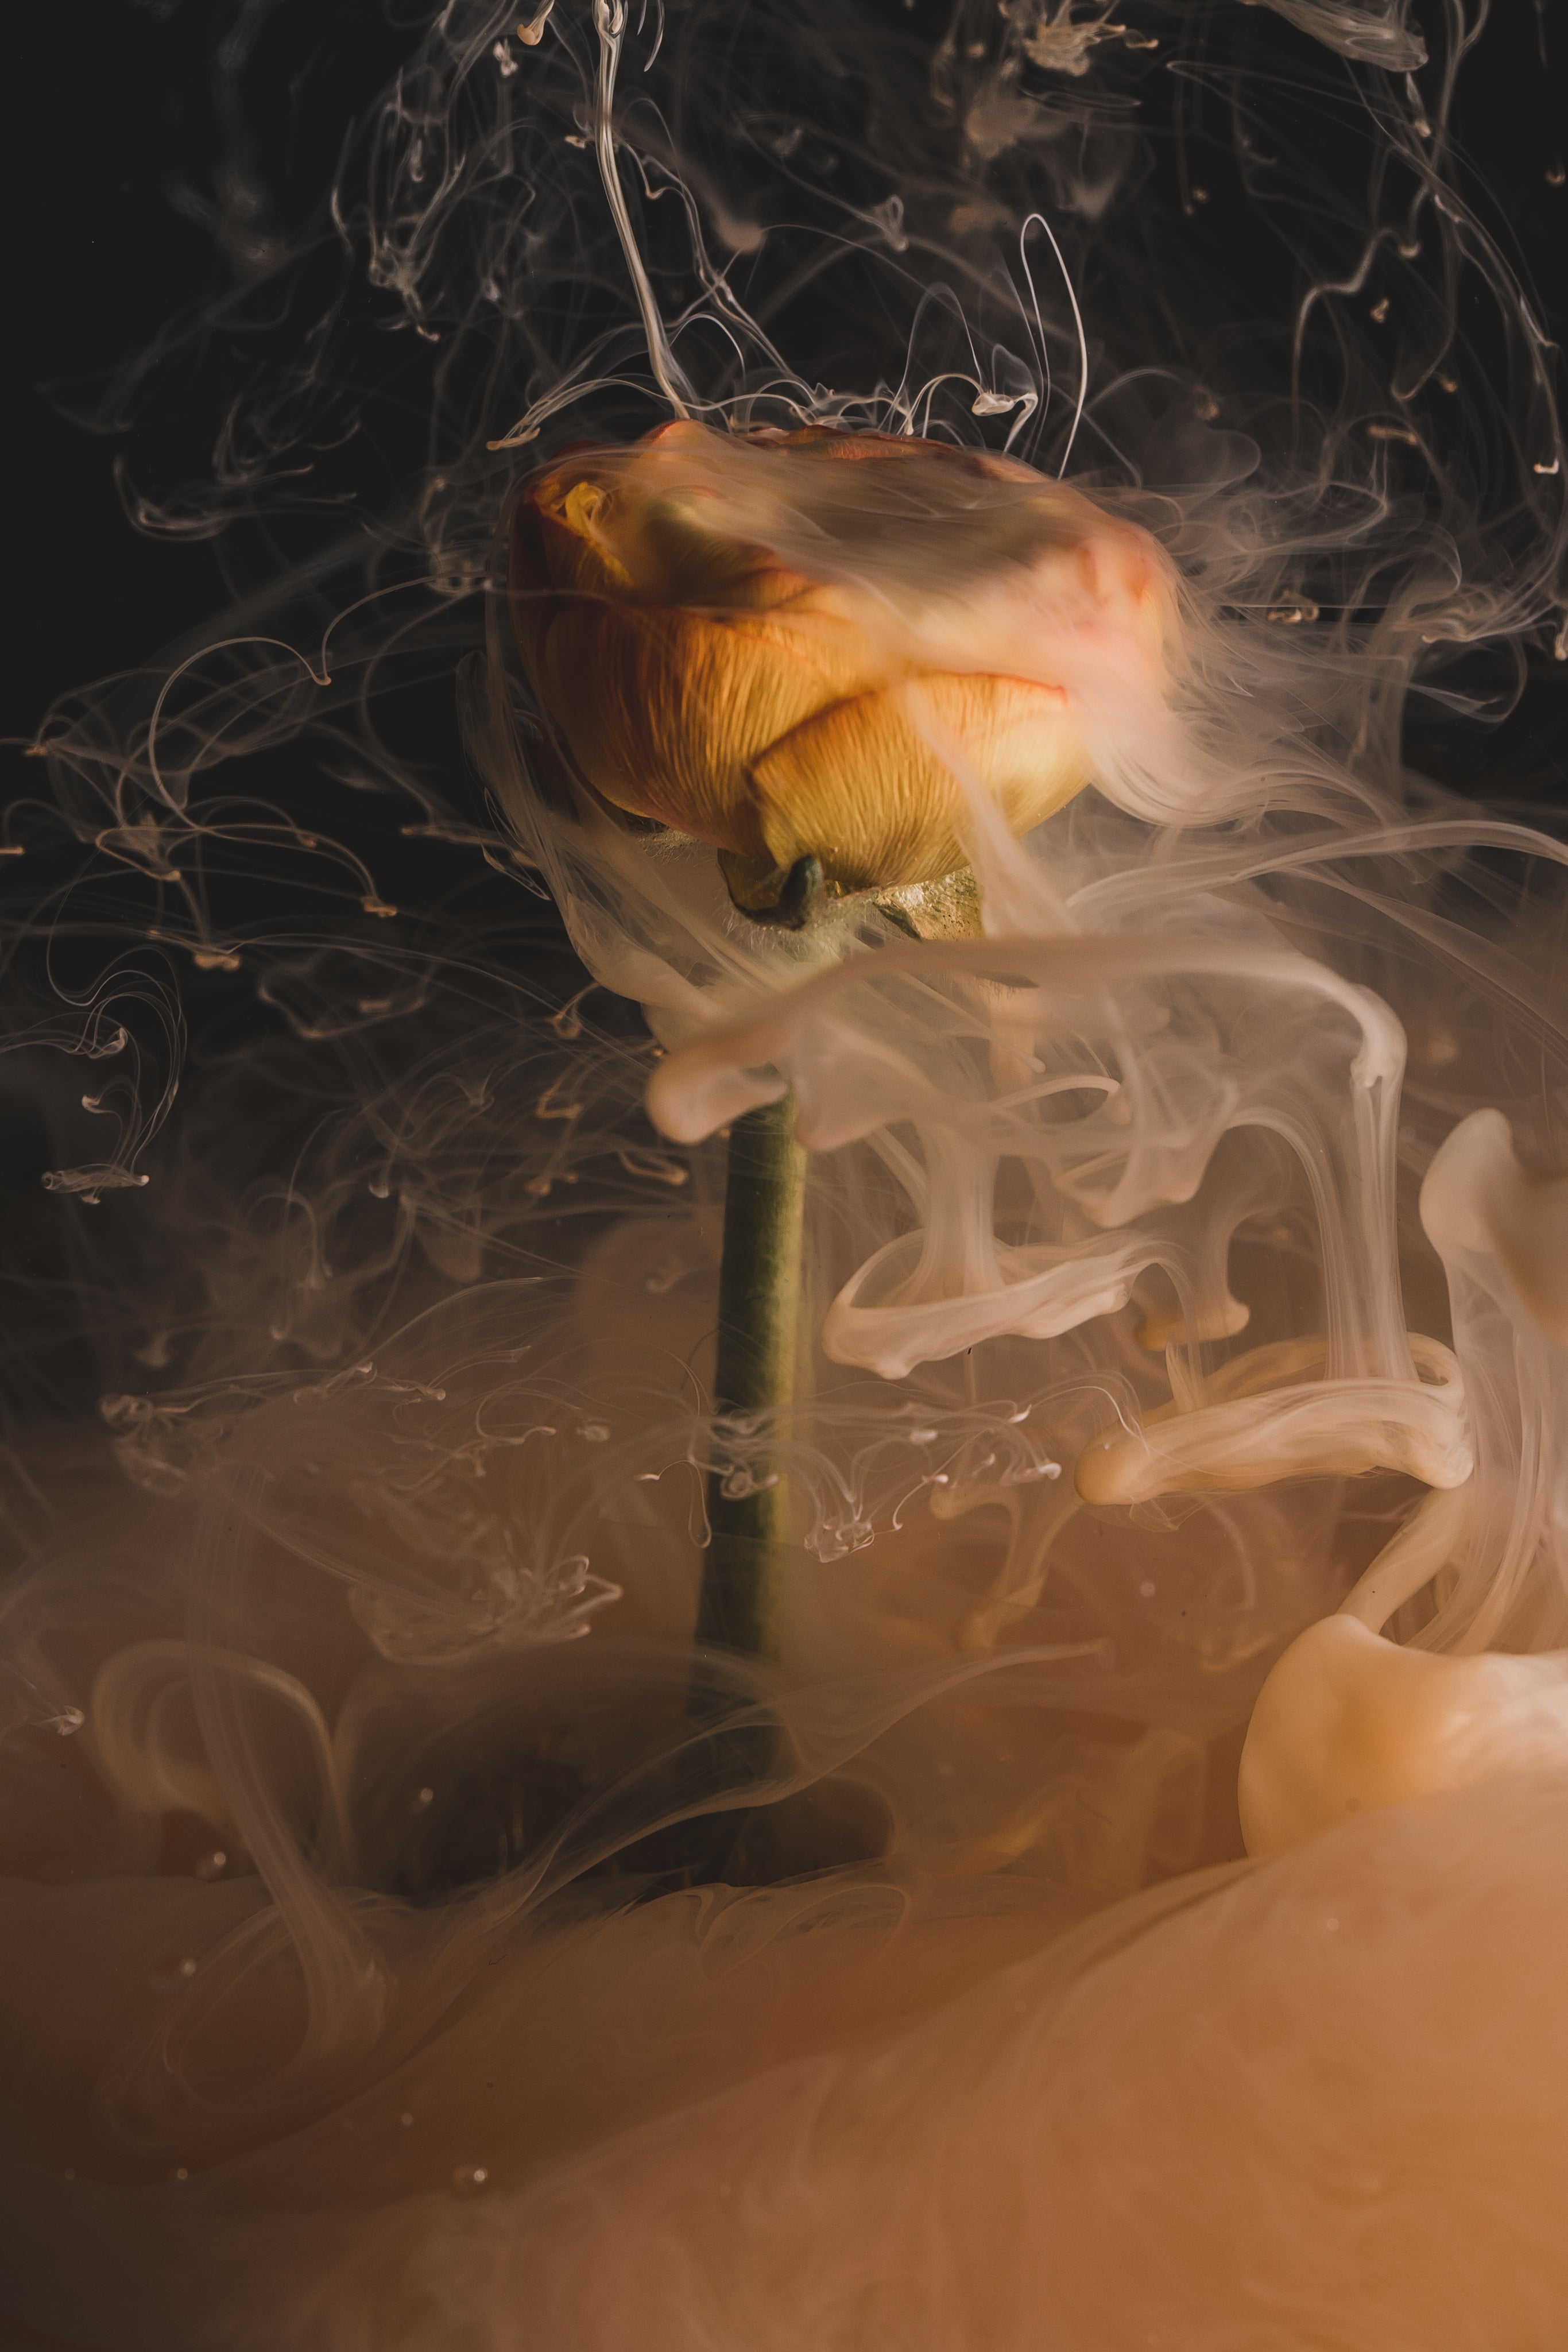 files/an-orange-flower-smokes-as-if-on-fire.jpg